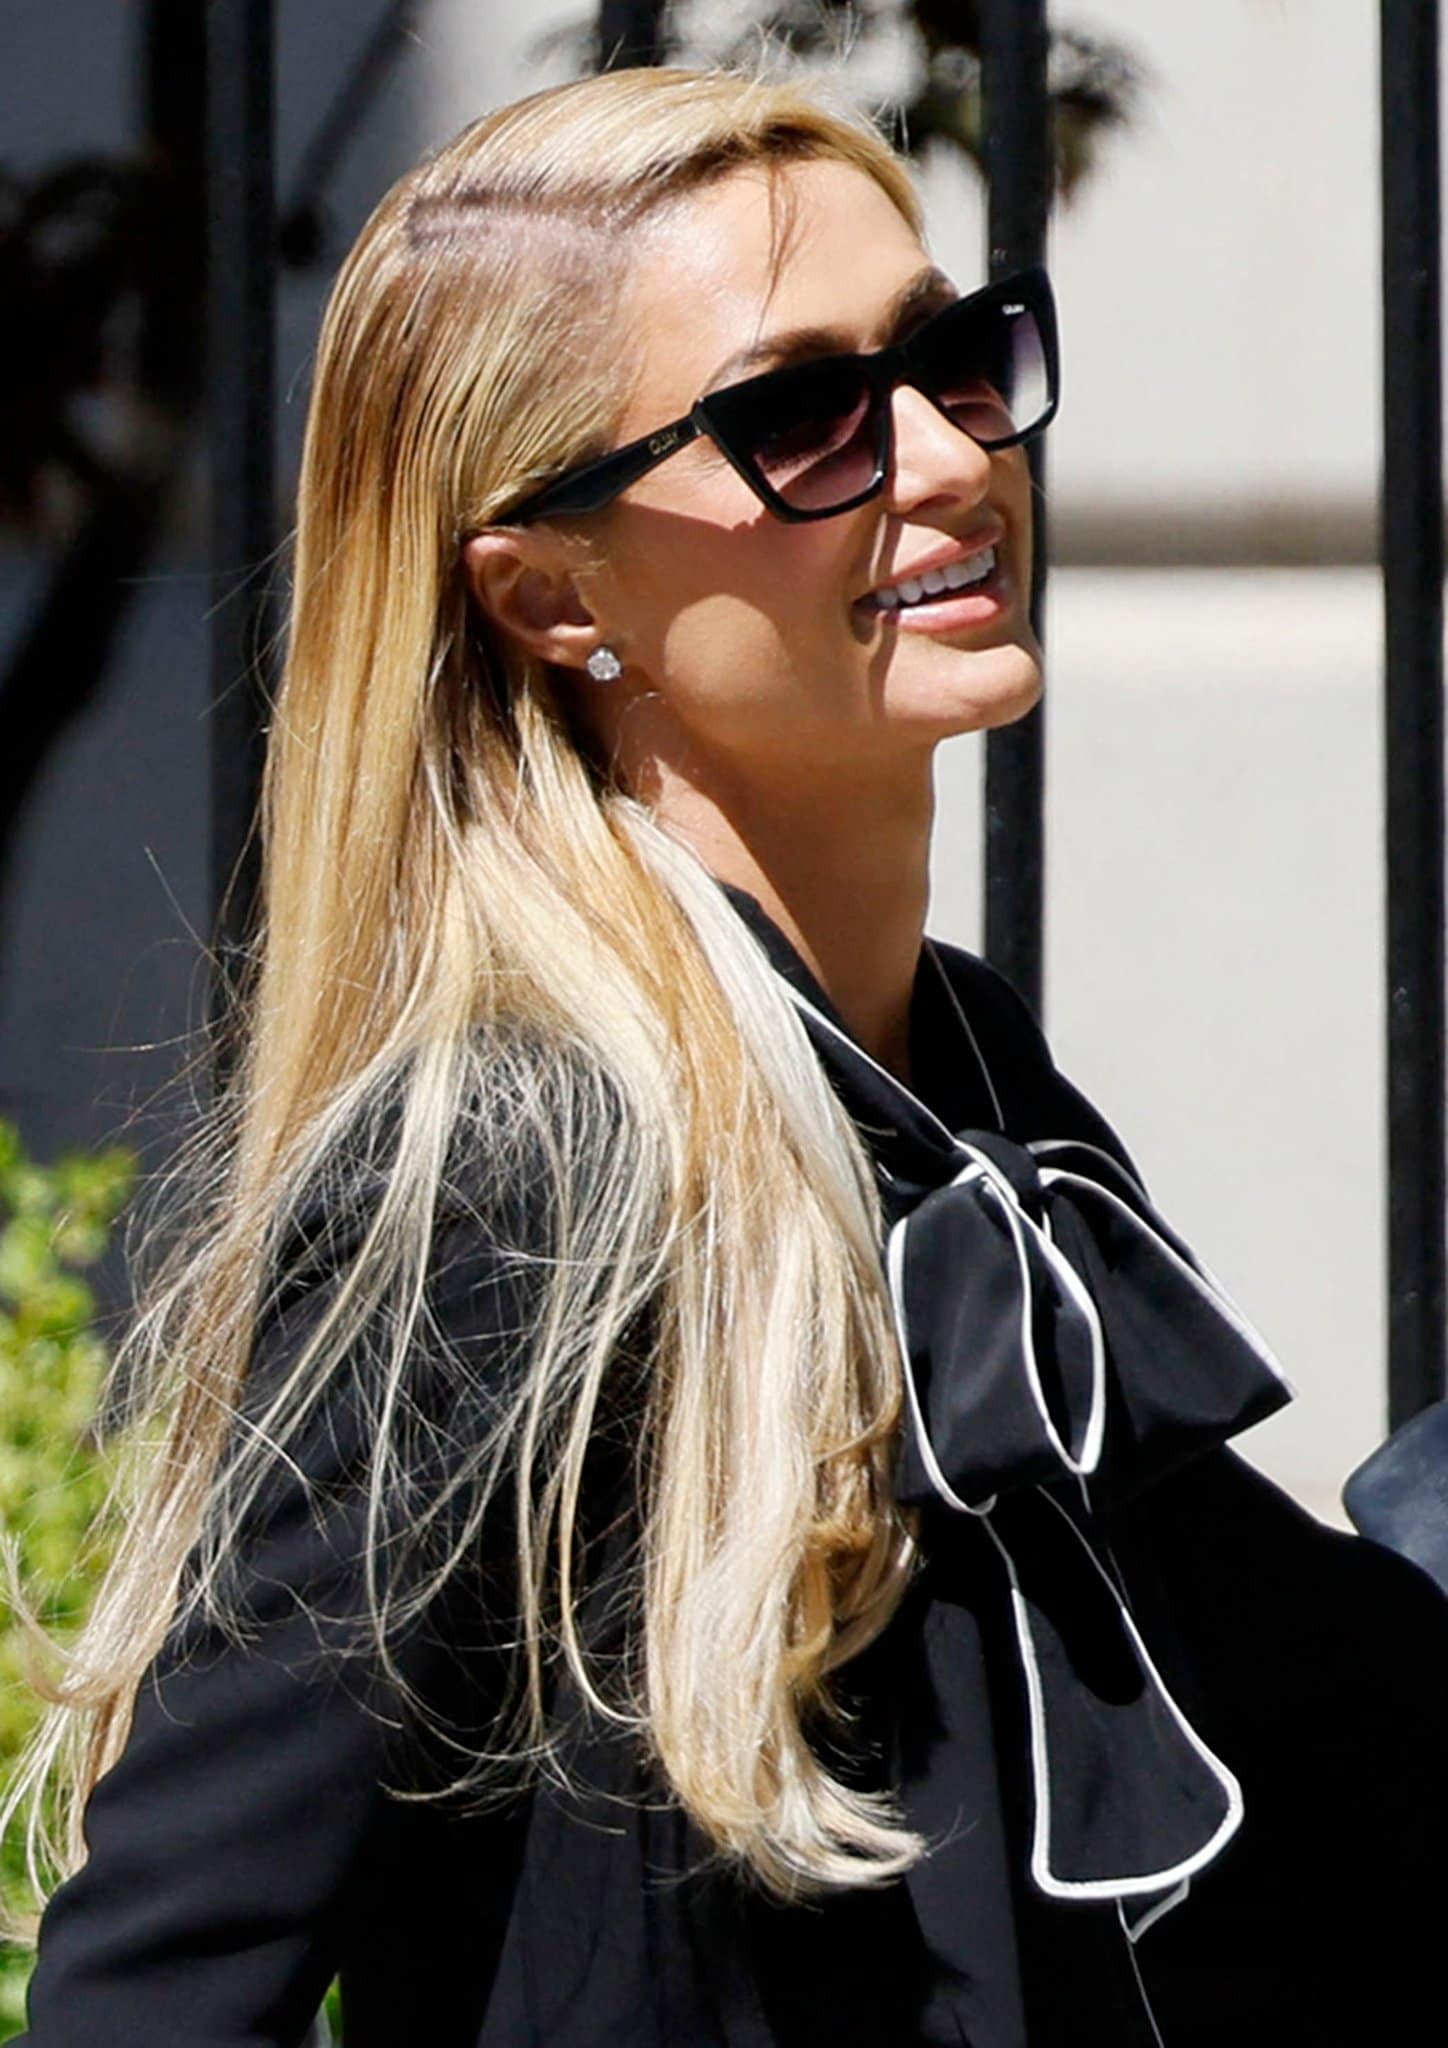 Paris Hilton styles her look with Quay Australia sunnies and diamond stud earrings